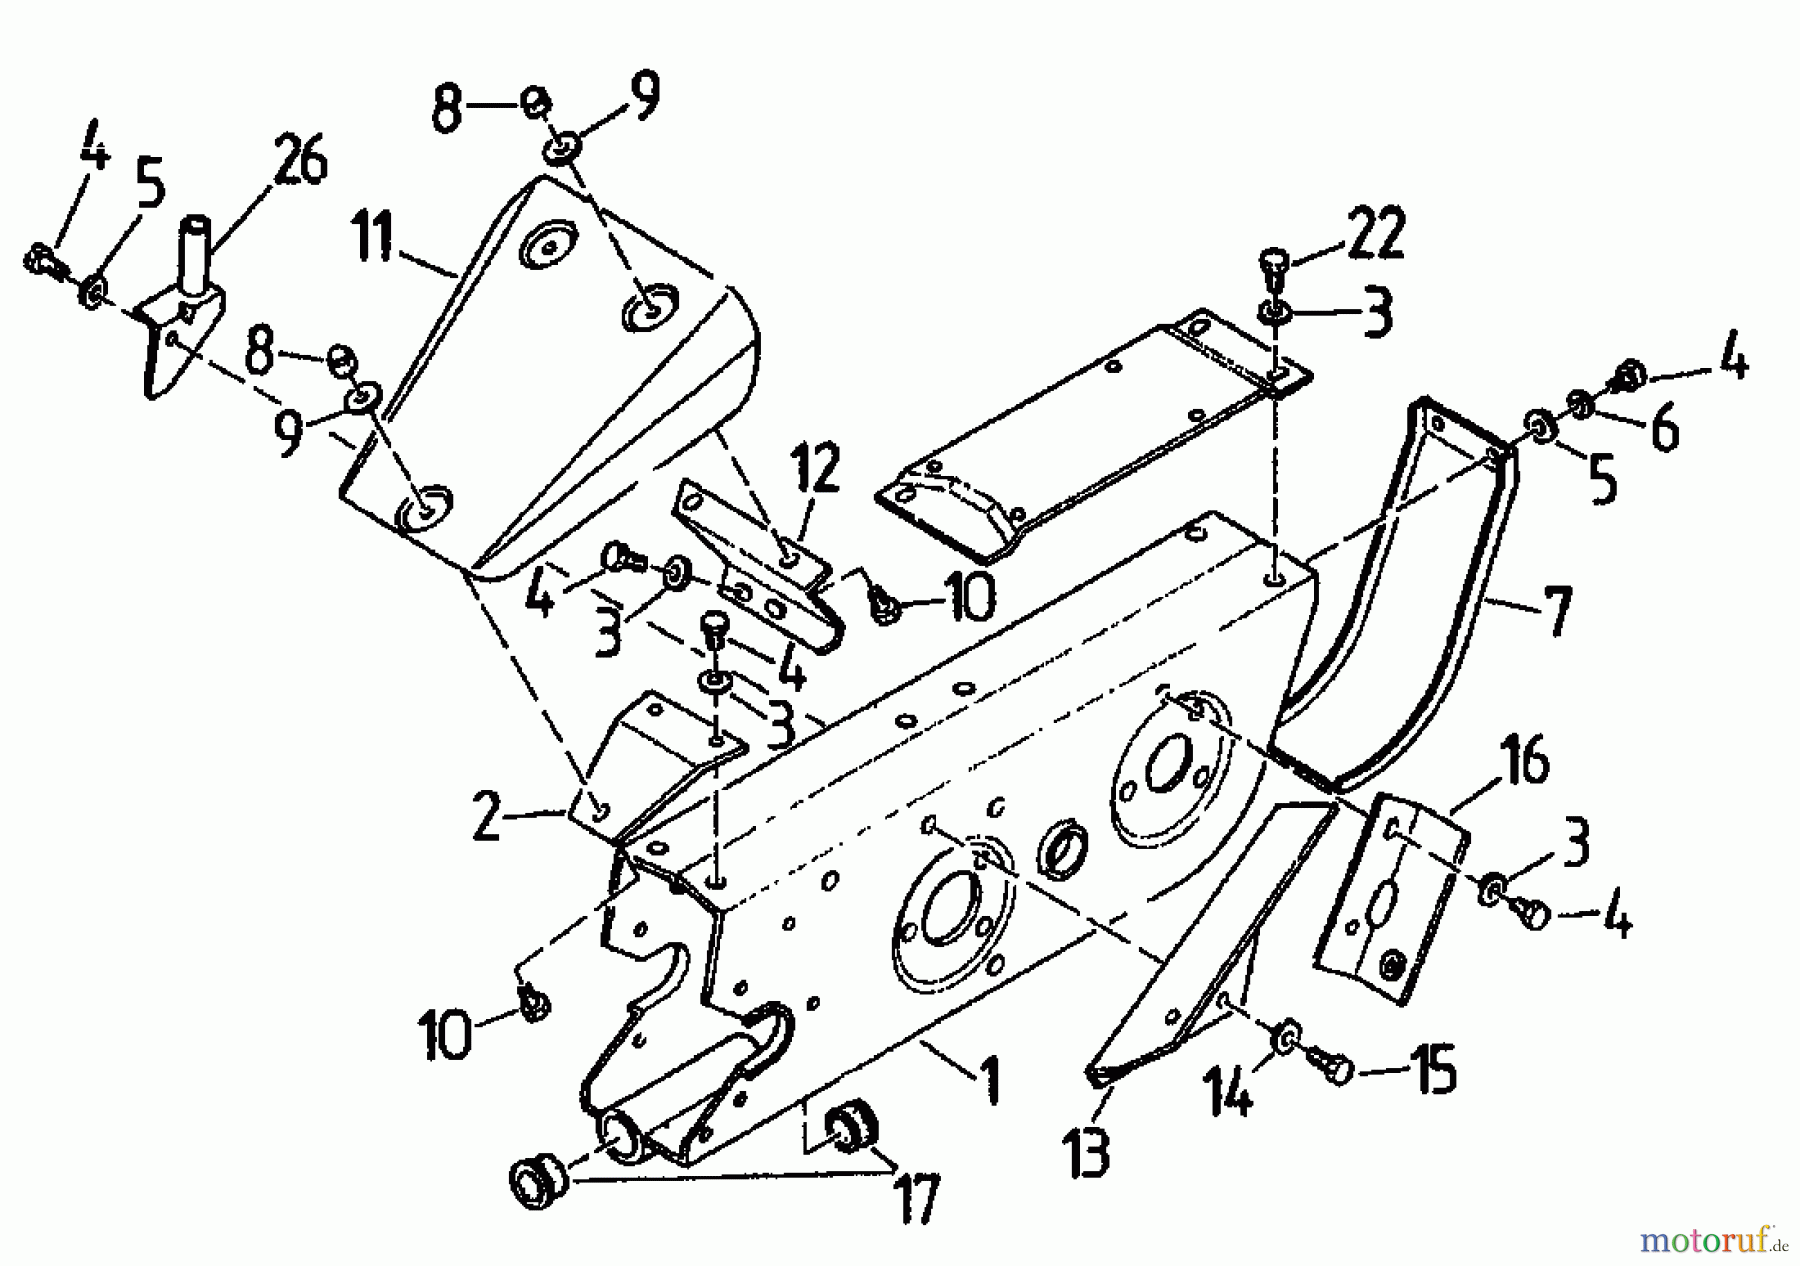  Gutbrod Cutter bar mower BM 91 07517.04  (1995) Transaxle case